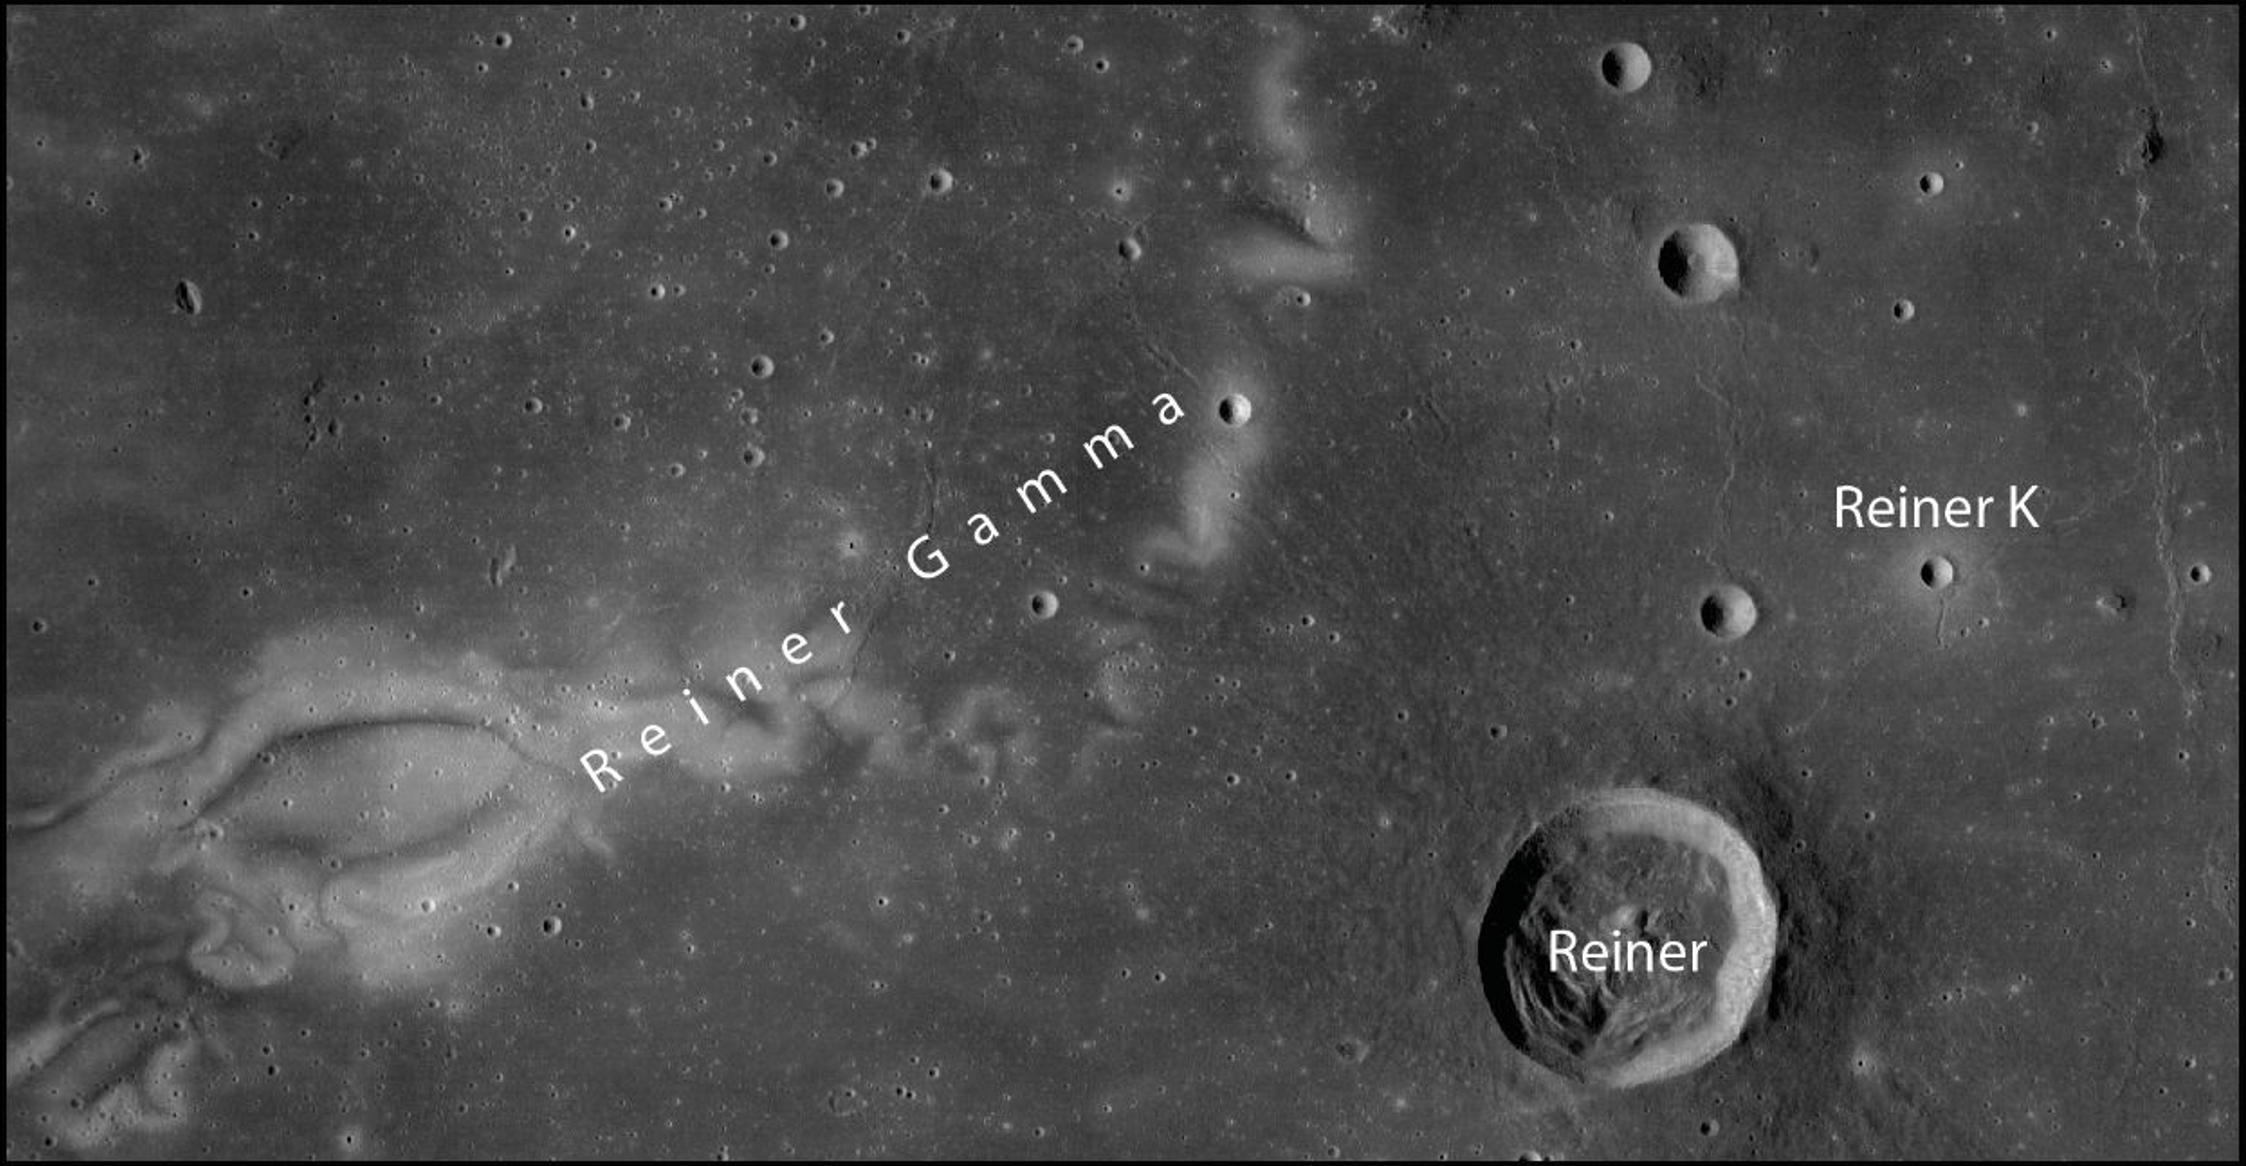 Reiner-Gamma-Region-on-the-Moon.jpg